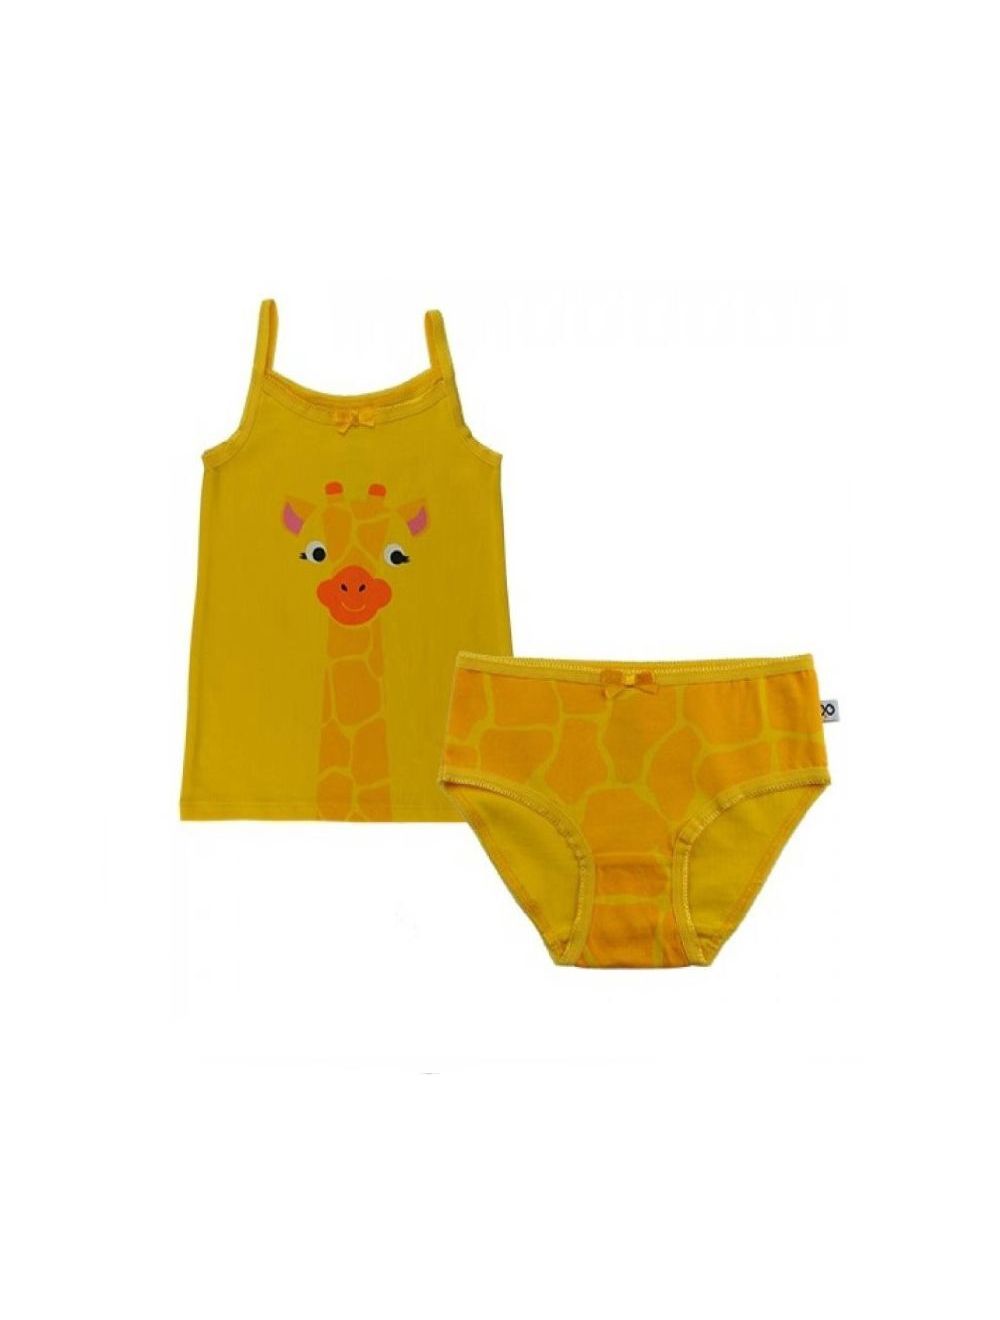 Zoocchini Organic Girls Cami Underwear Set Giraffe 4T/5T